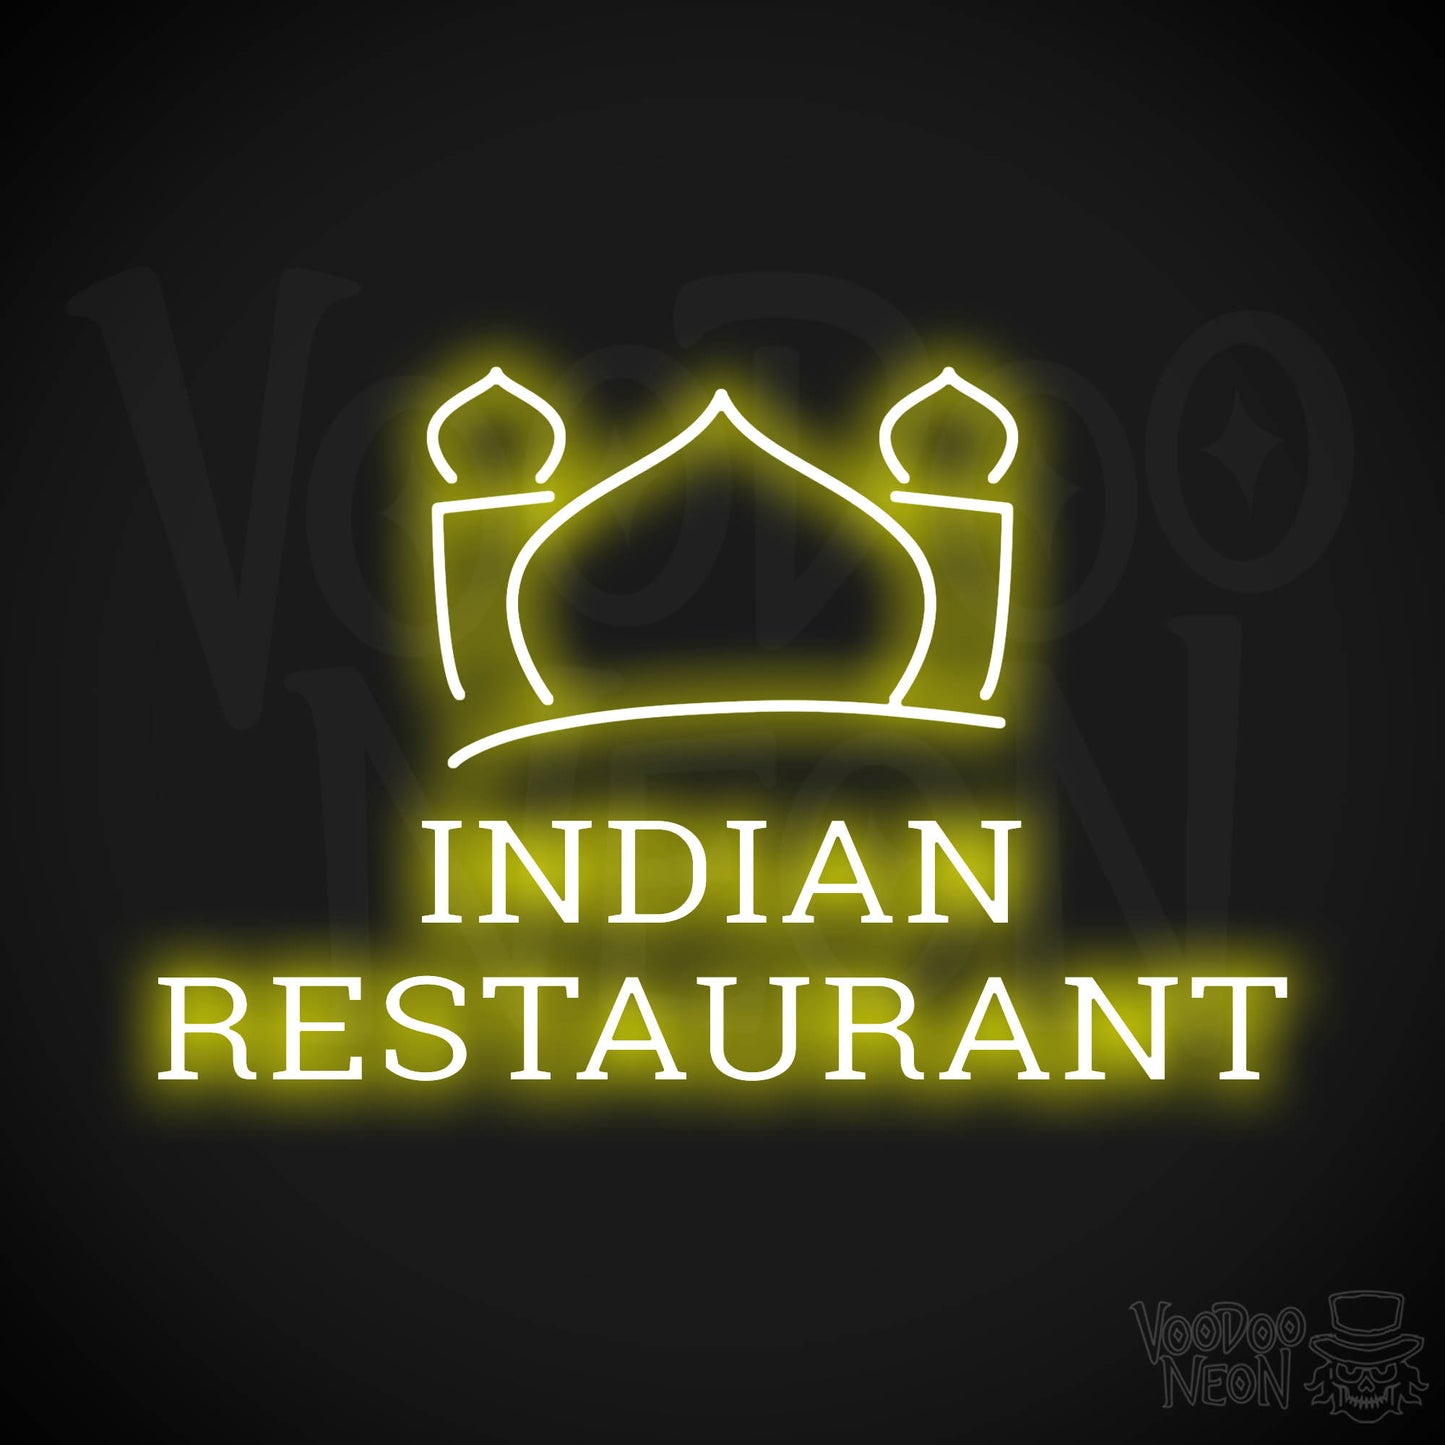 Indian Restaurant LED Neon - Yellow